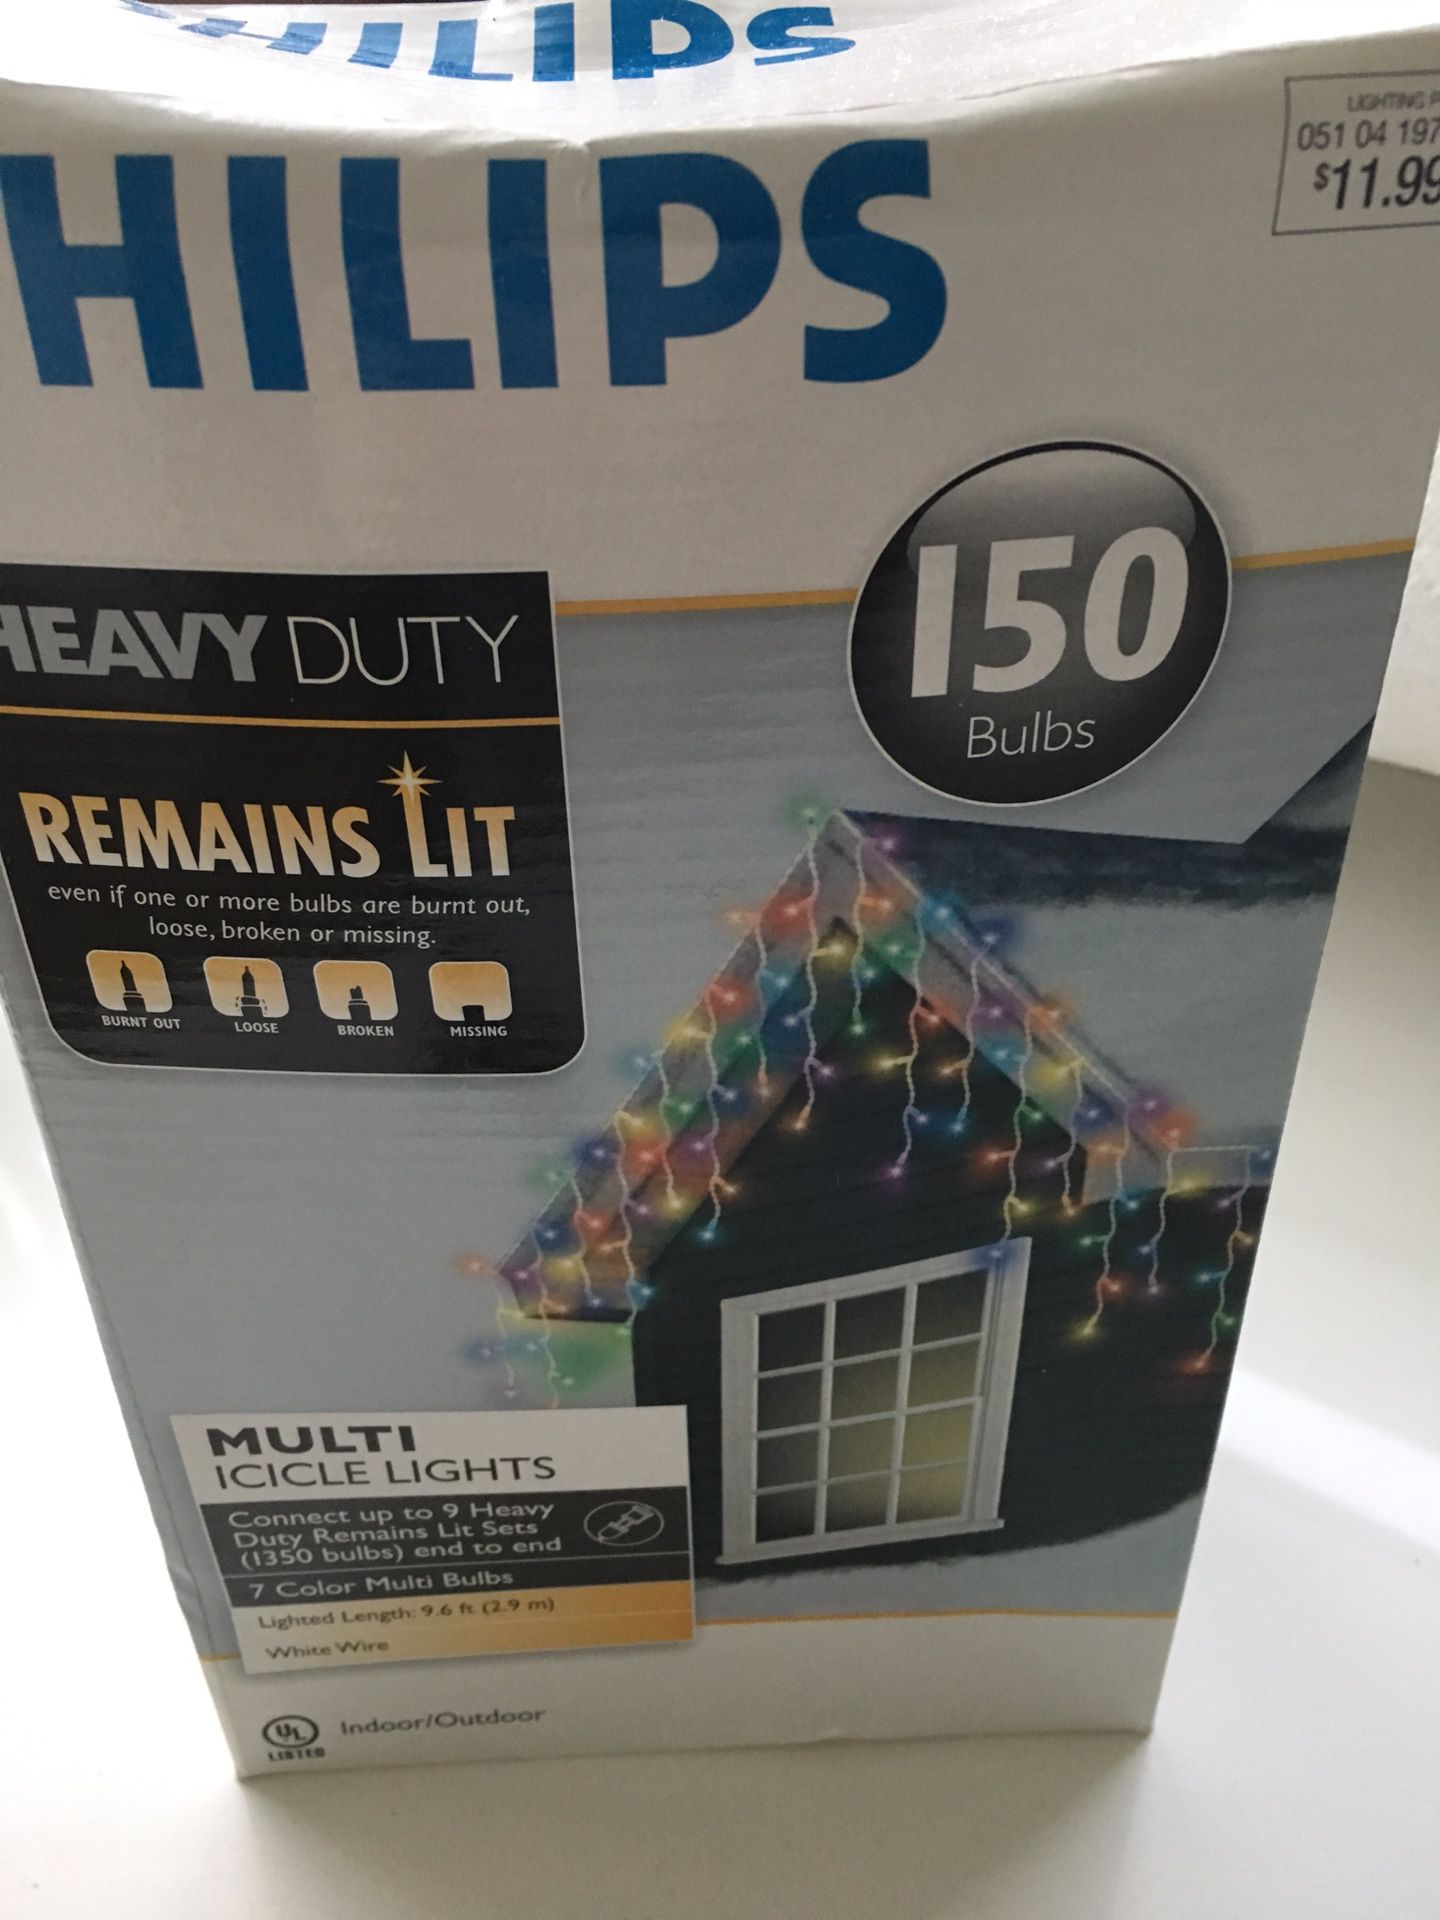 Philips multi icicle lights